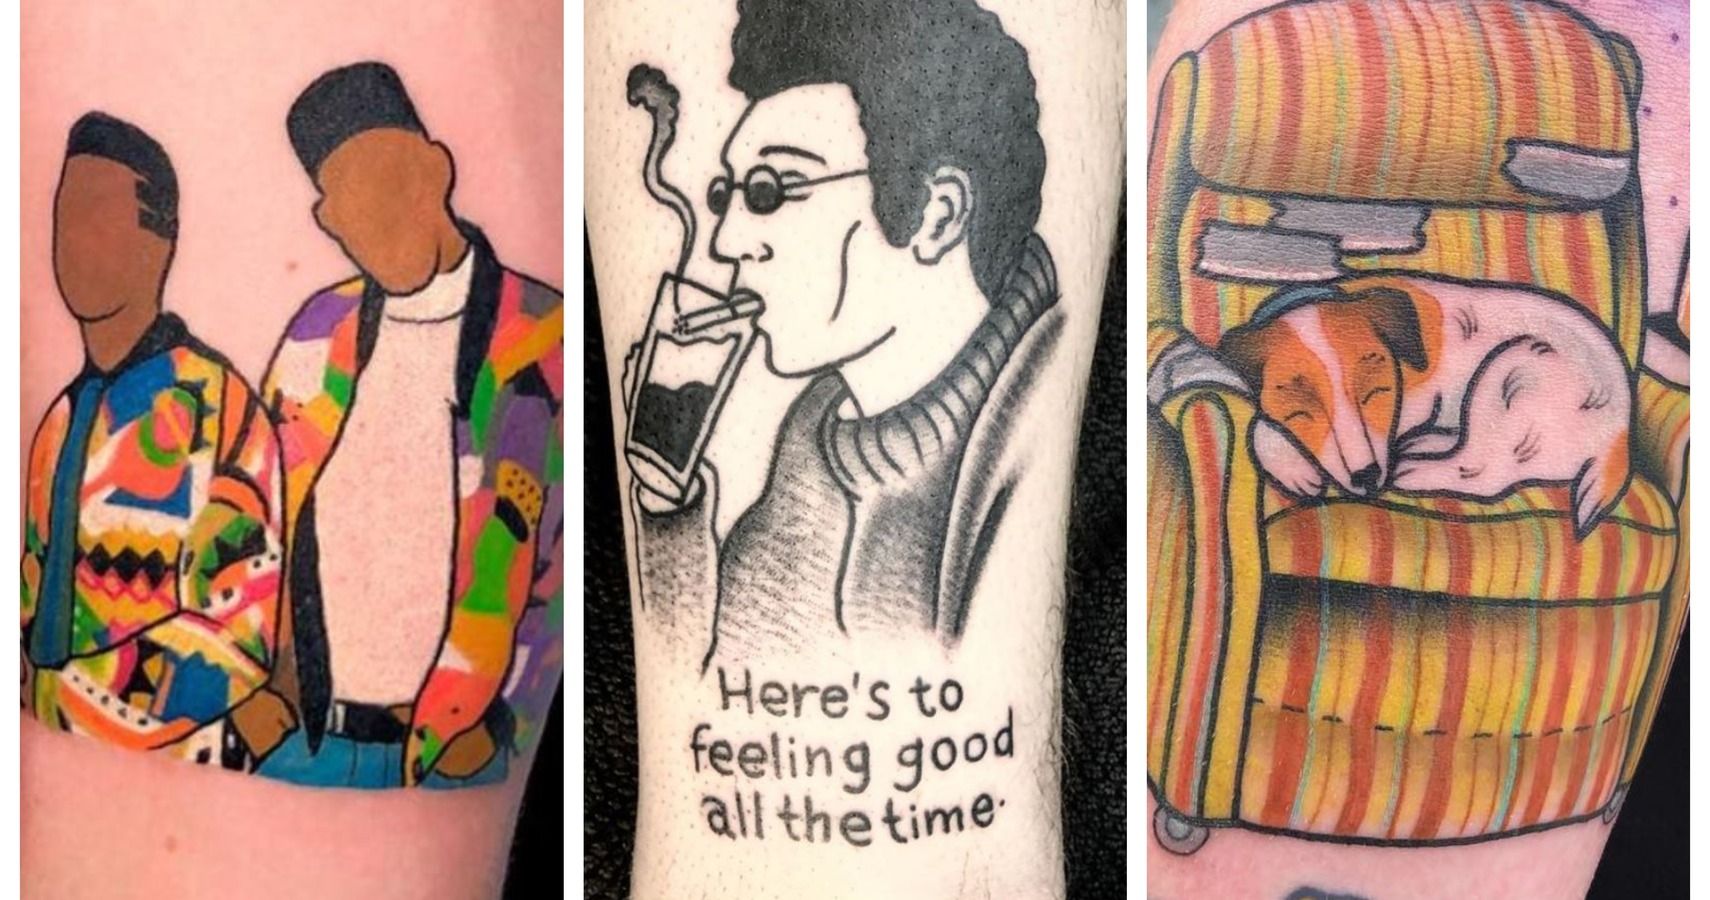 Nickelodeon-themed tattoos will make 90s babies feel very, very nostalgic |  Metro News